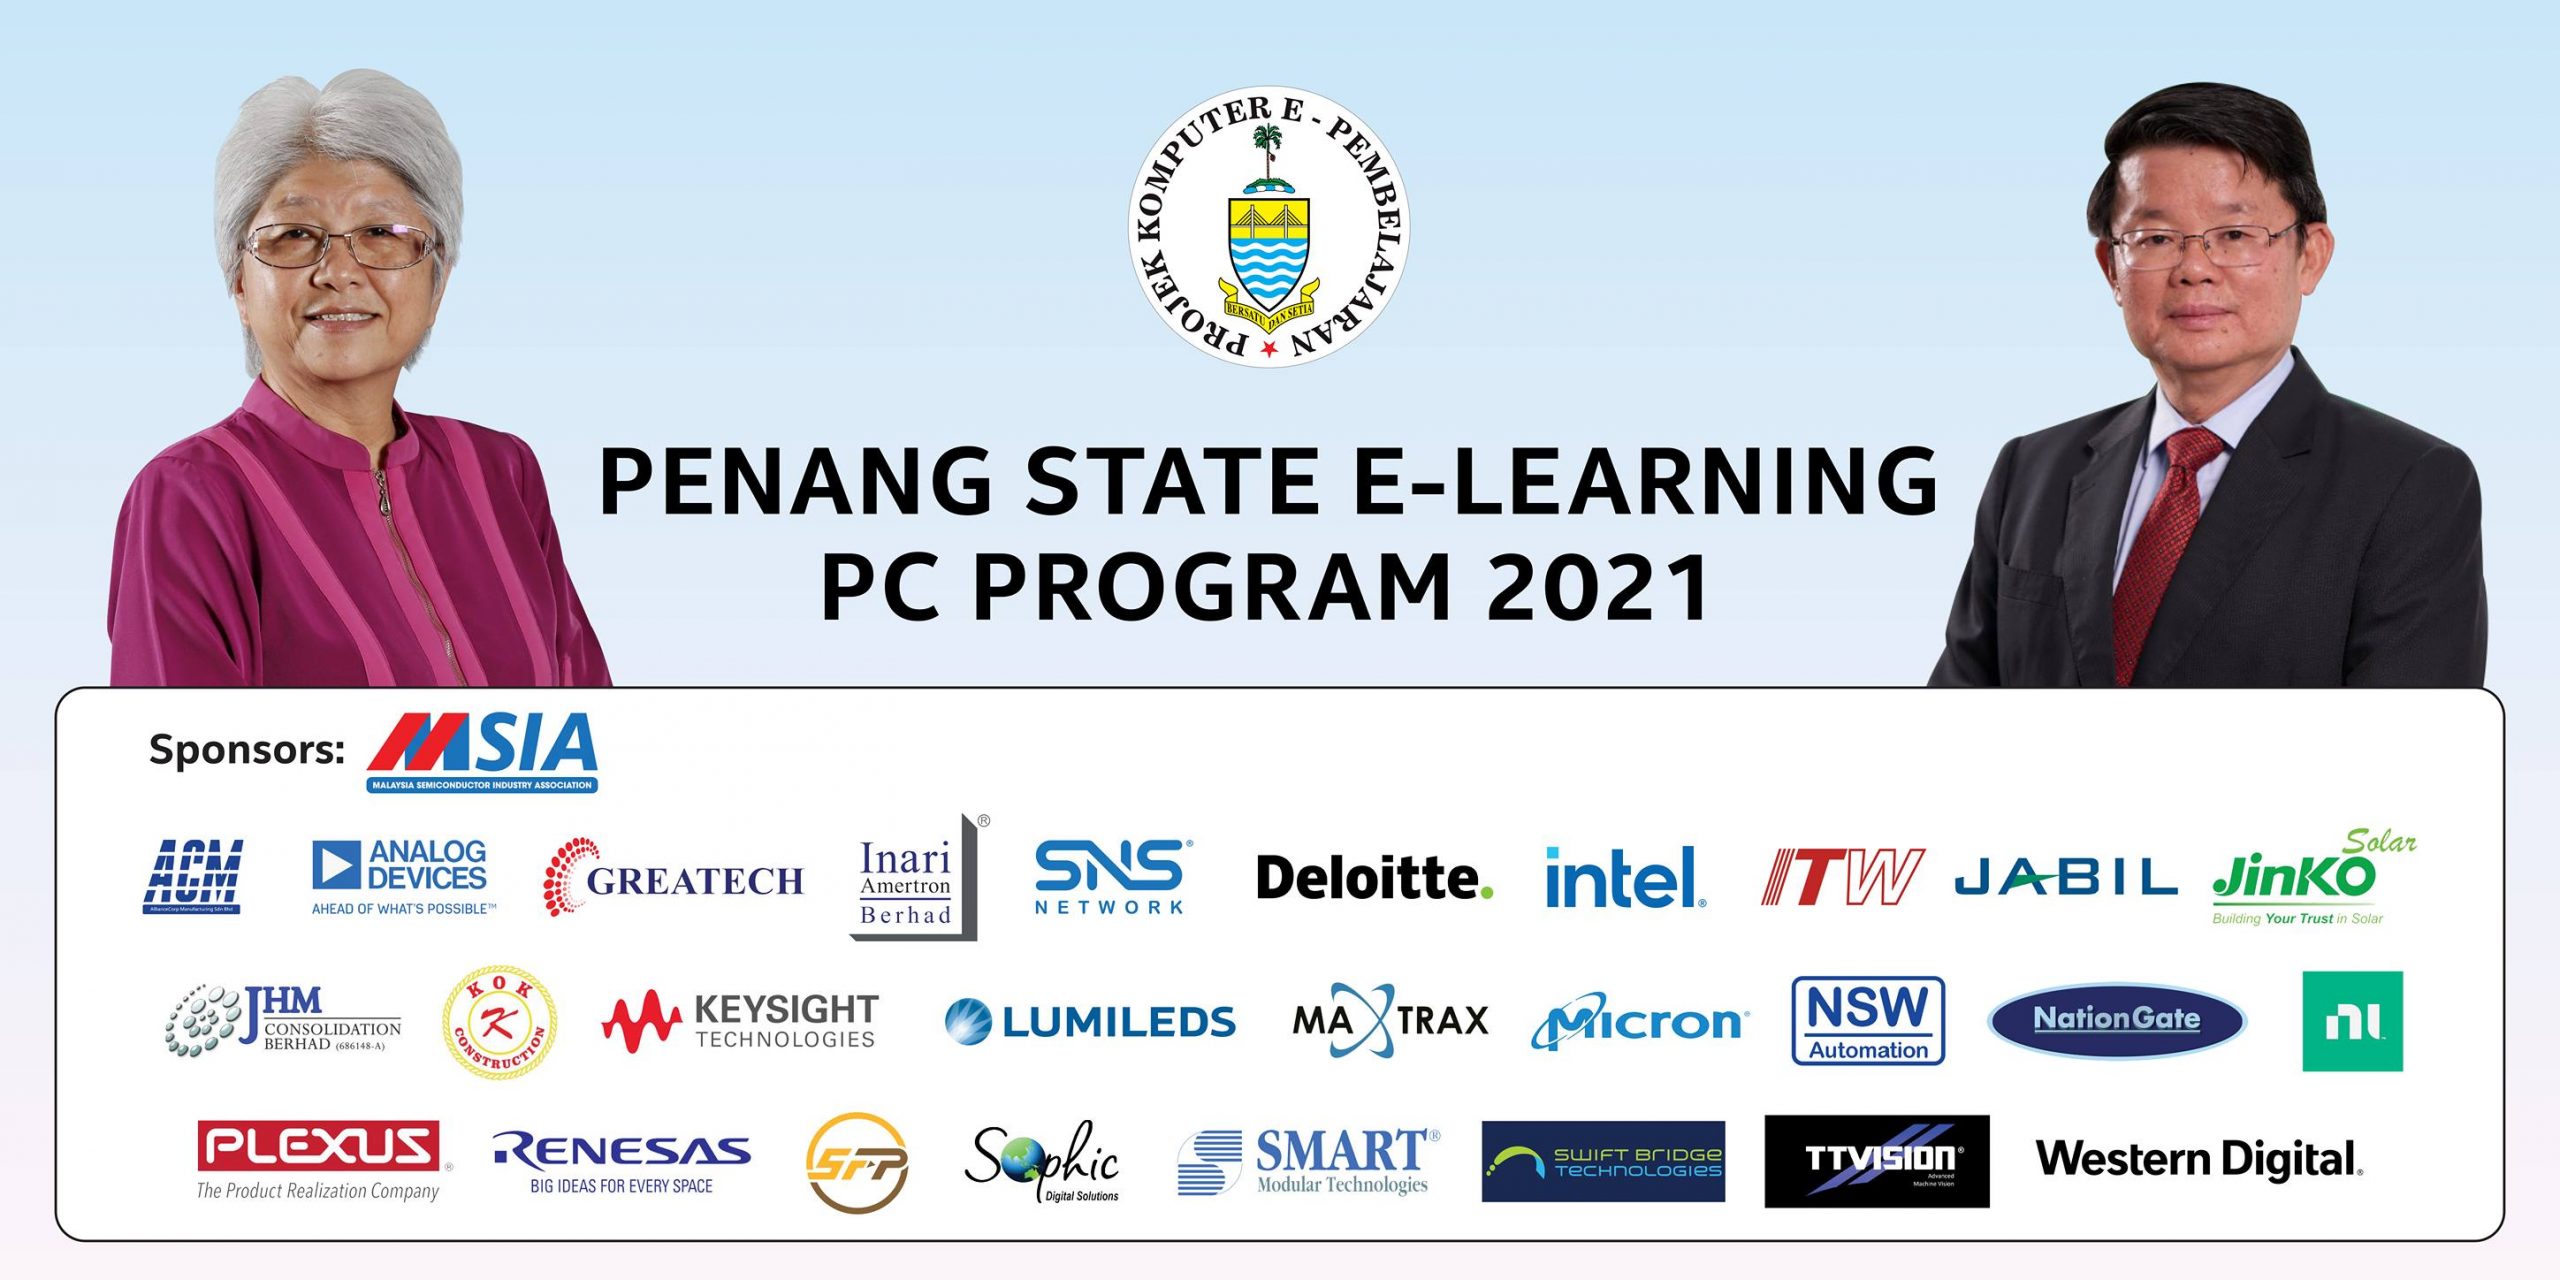 Penang State E-Learning Program 2021